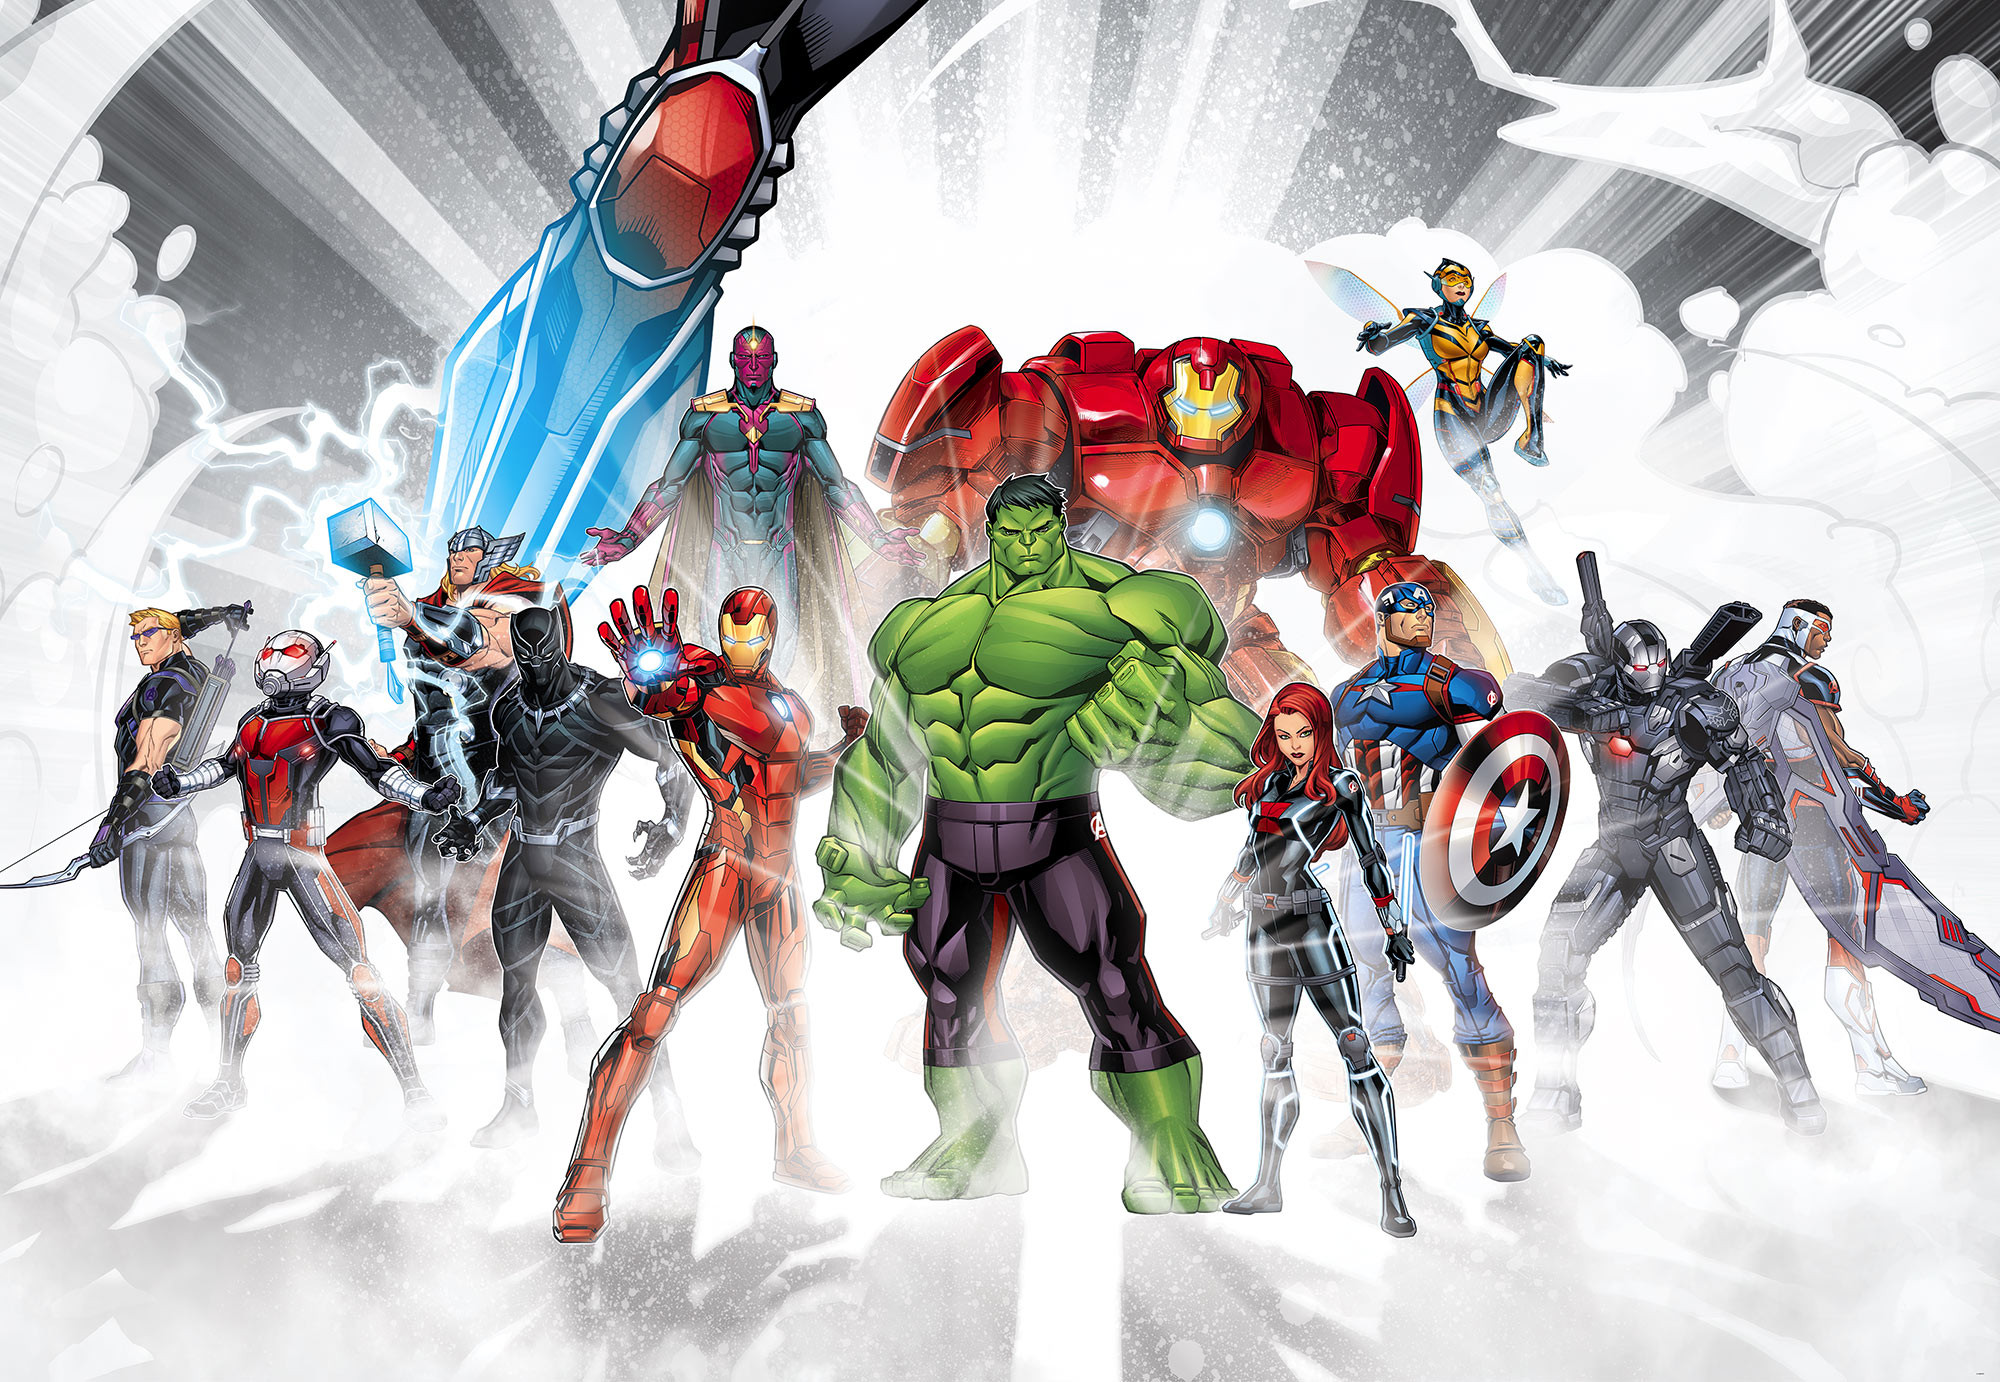 Big Screen Showdown Avengers and X-Men Set to Clash in Next Marvel Blockbuster 